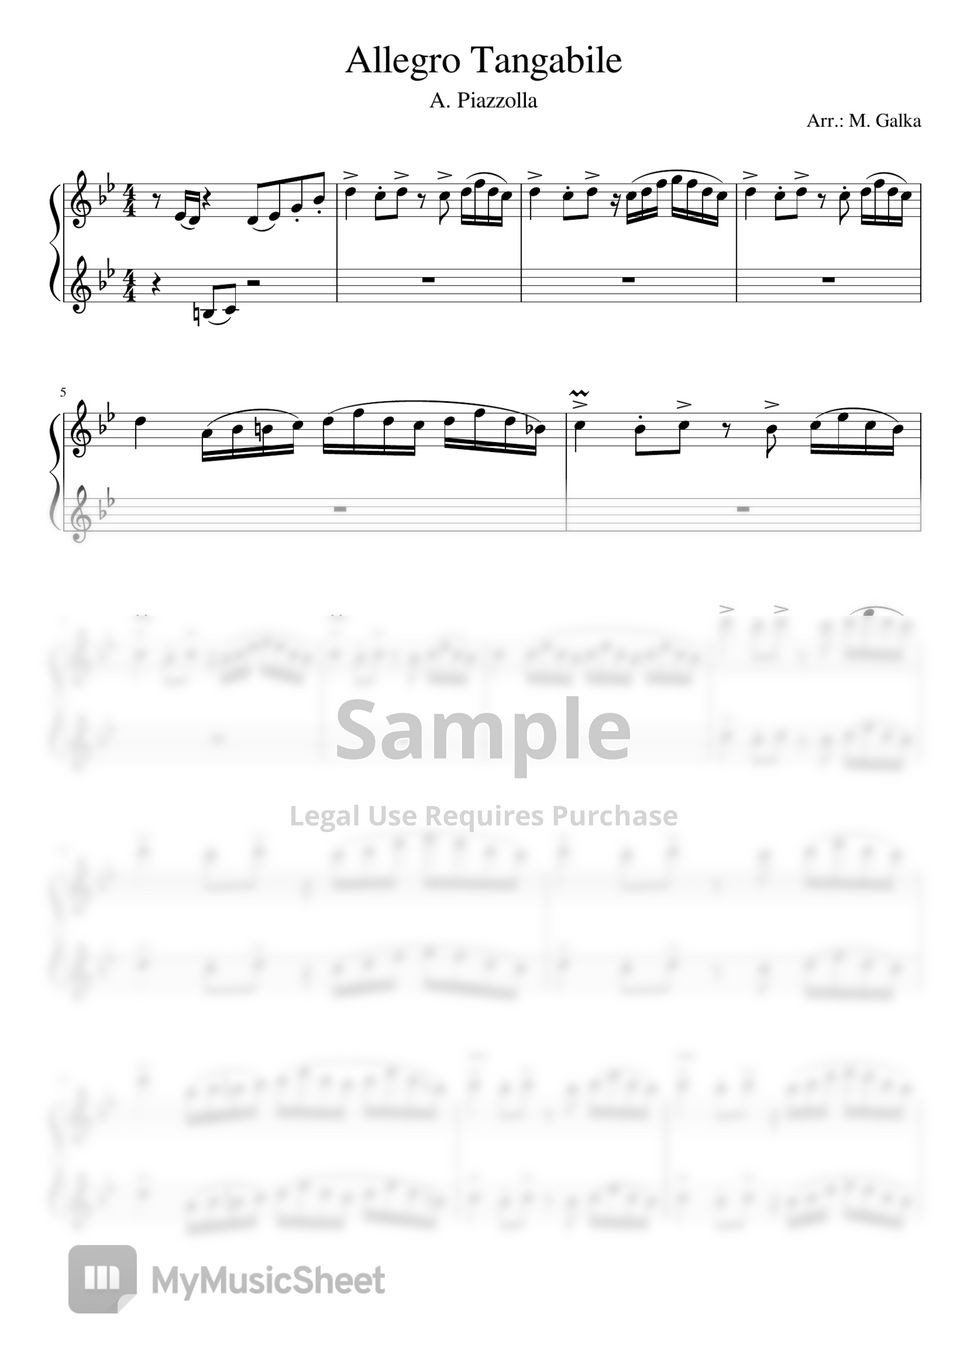 А́стор Пьяццо́лла (Astor Piazzolla) - Аллегро тангабиле (Allegro tangabile)  фортепиано в 4 руки (Piano 4 hands) by Magdalena Galka